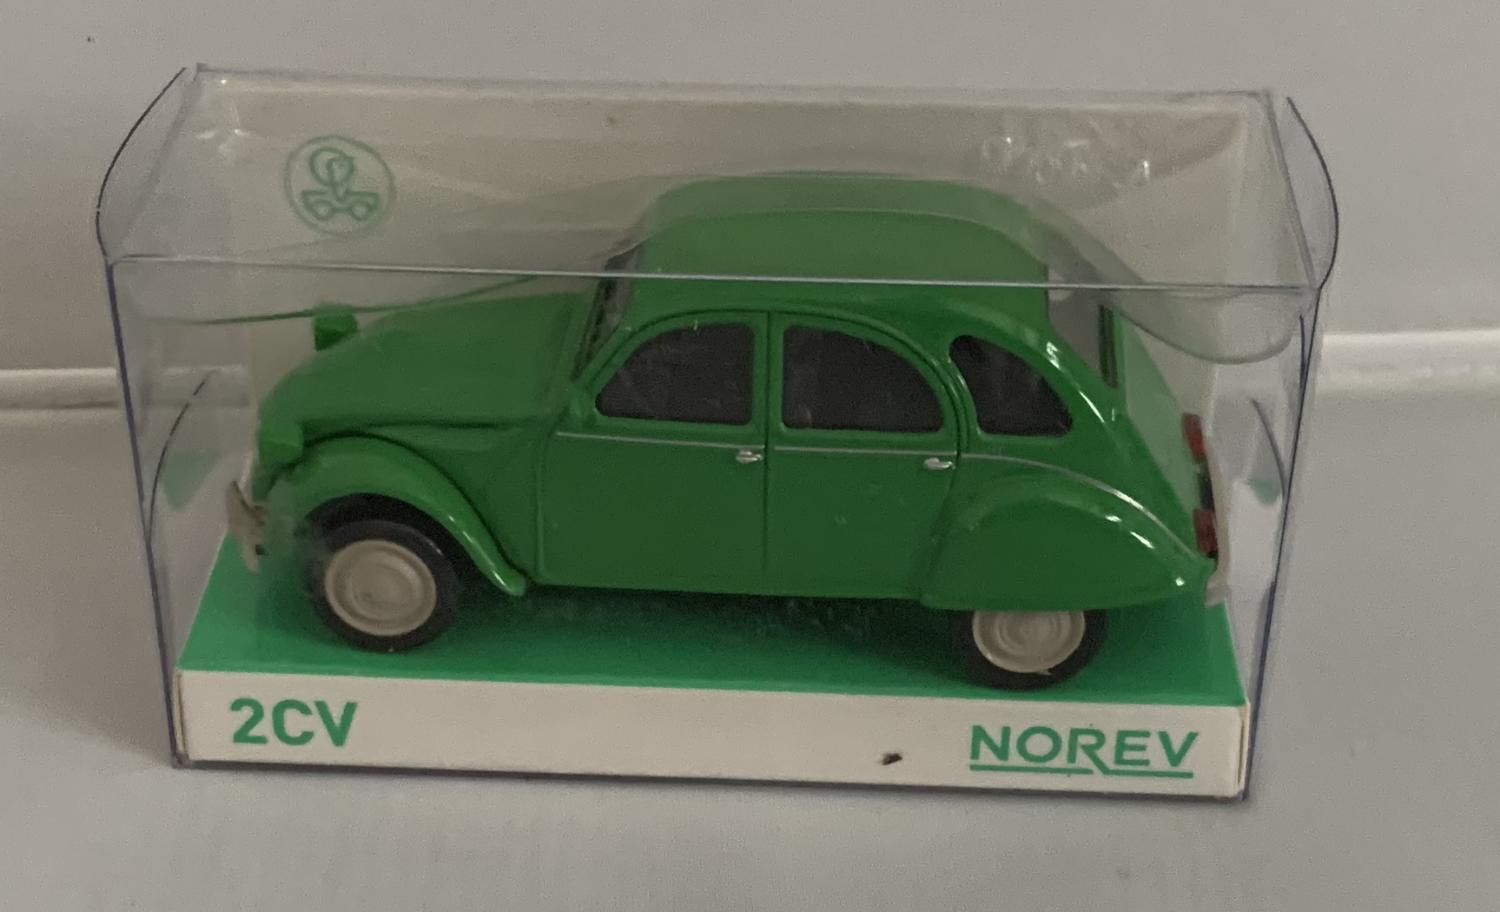 Citroen 2CV6 in green  1:43 scale model from Norev, 150510